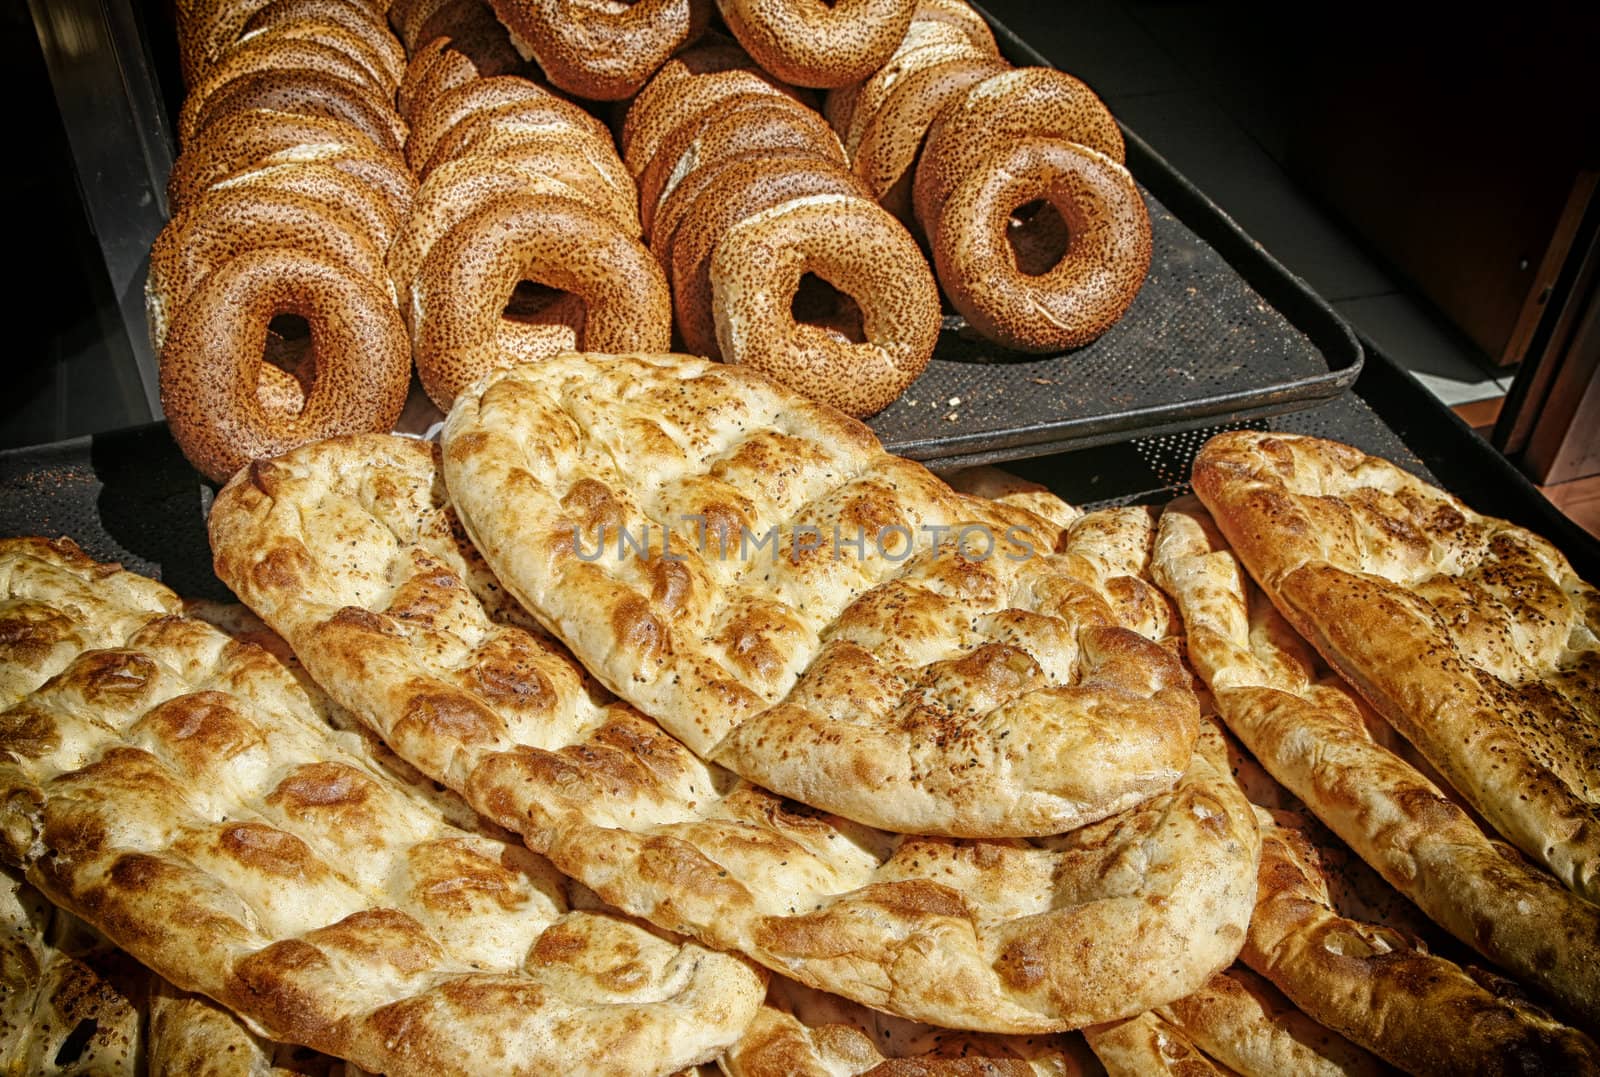 Freshly baked bread in the doorway of a bakers shop in Istanbul, Turkey.